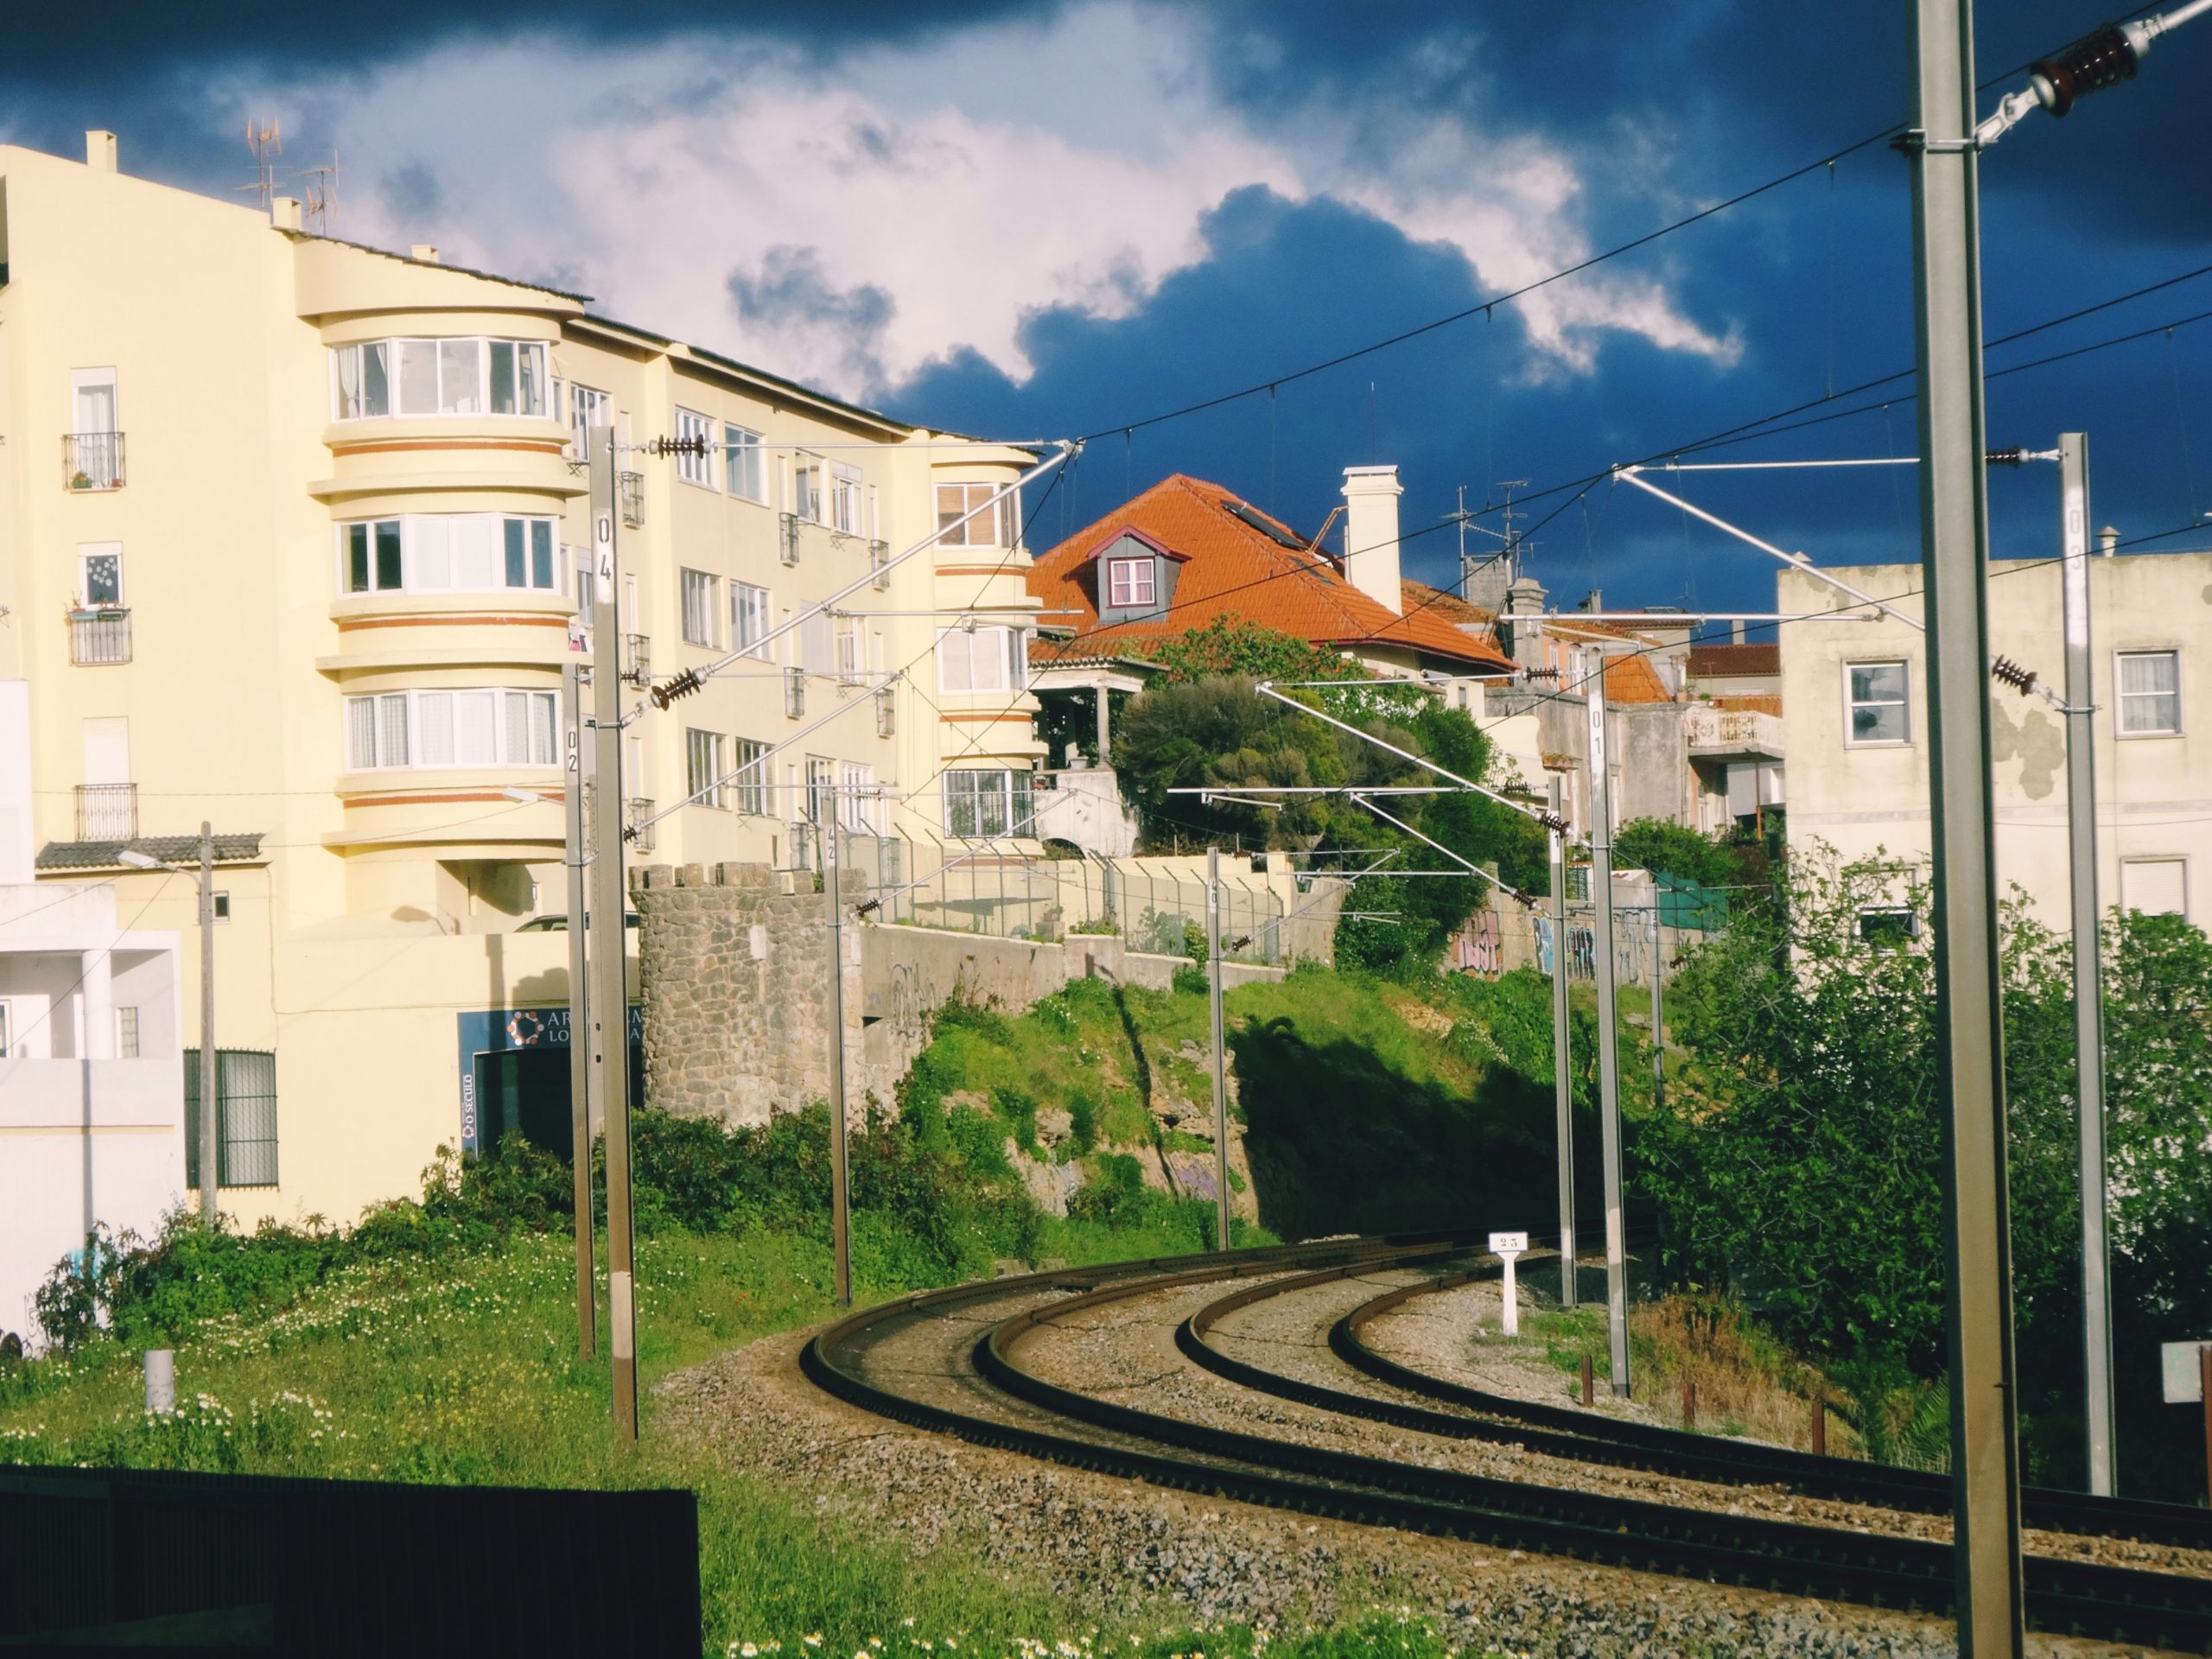 A Railway Track